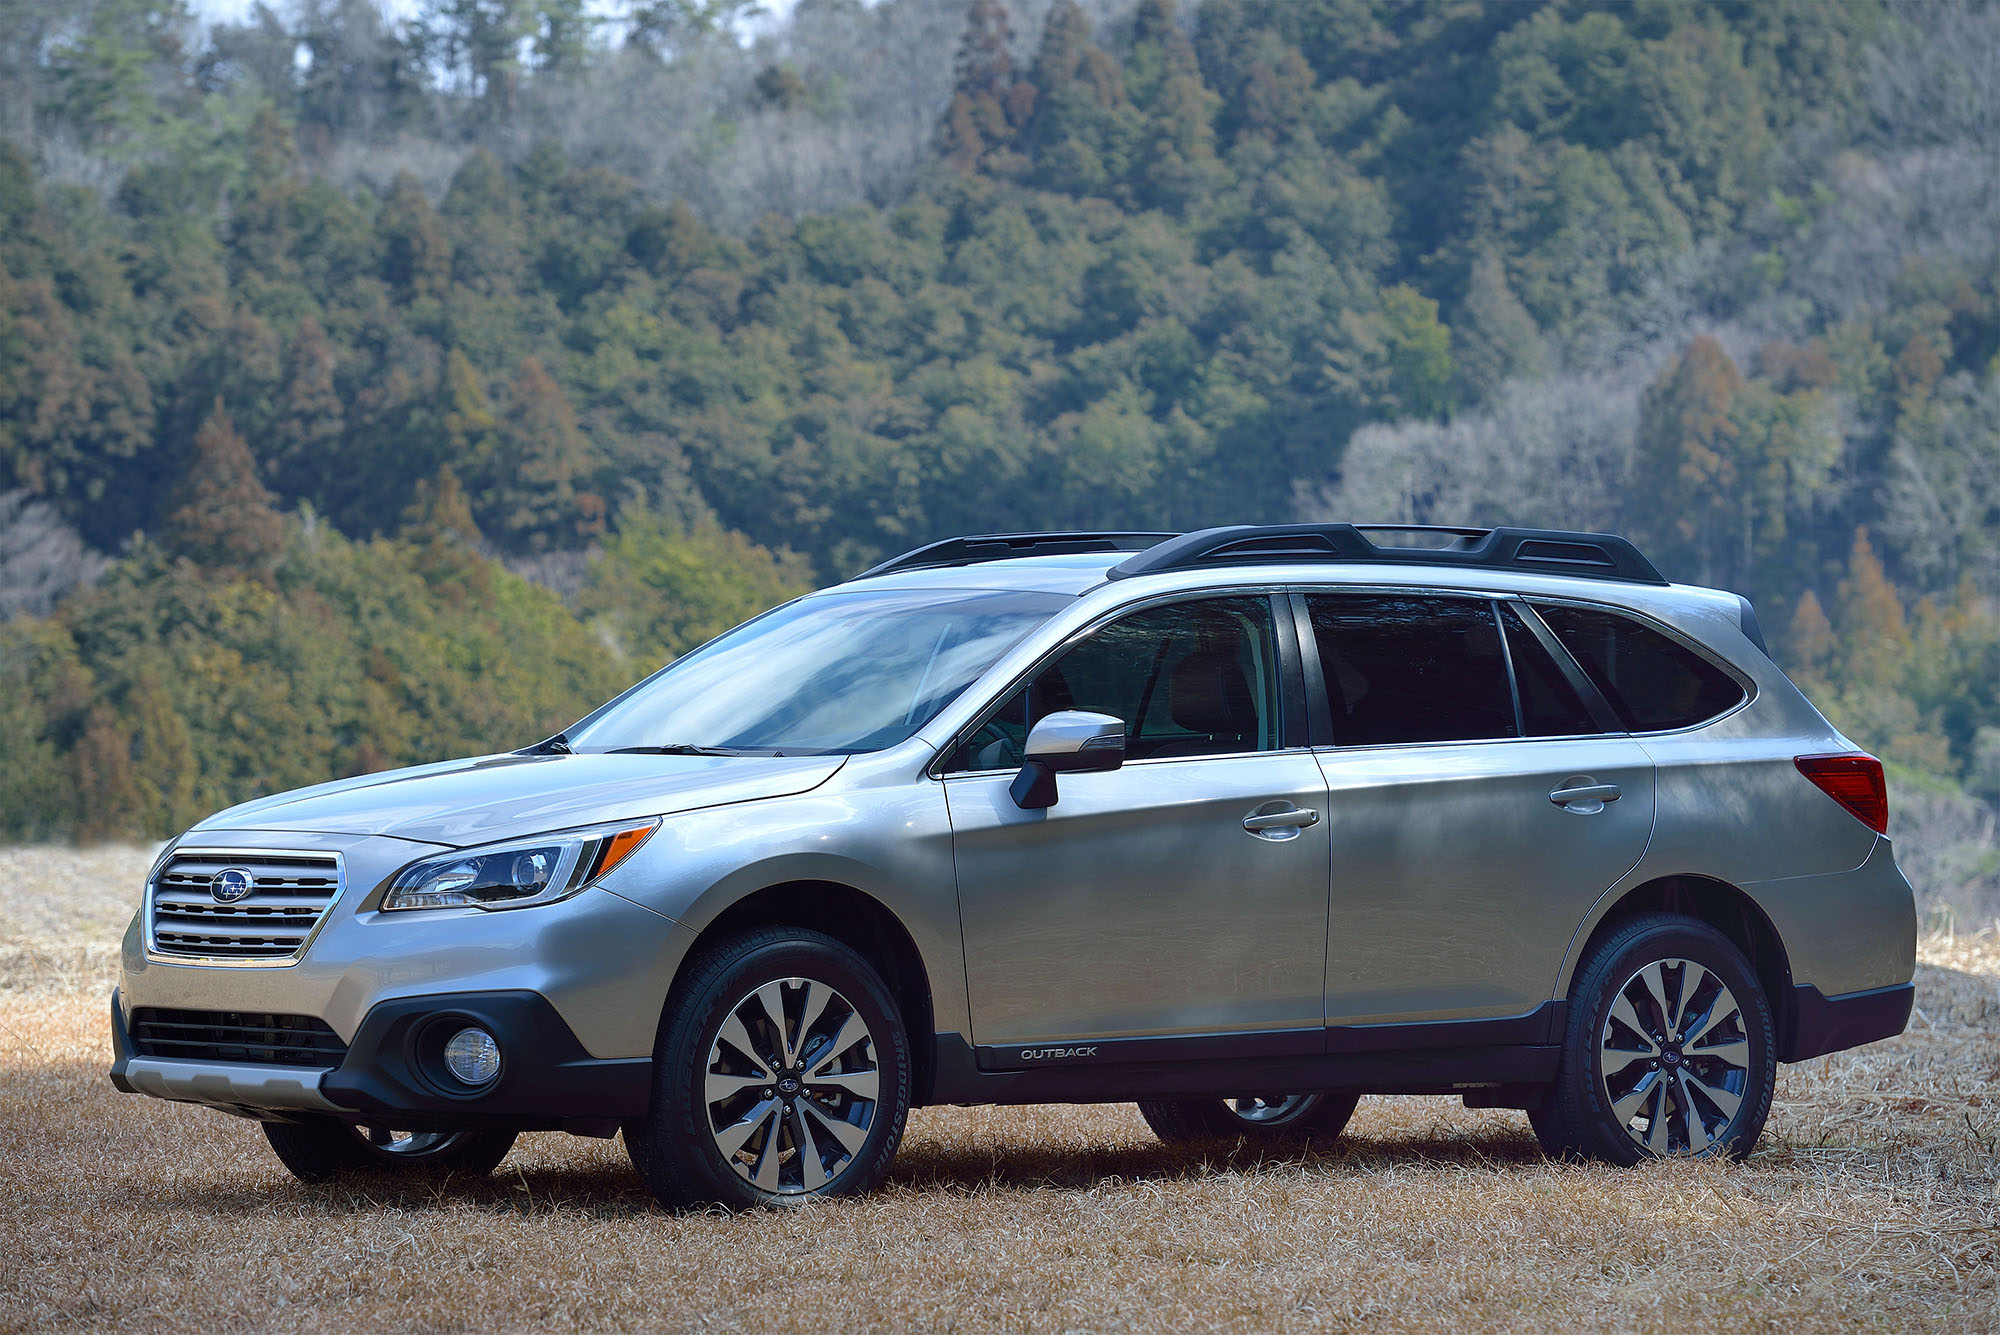 Subaru Canada Introduces All-new 2015 Outback